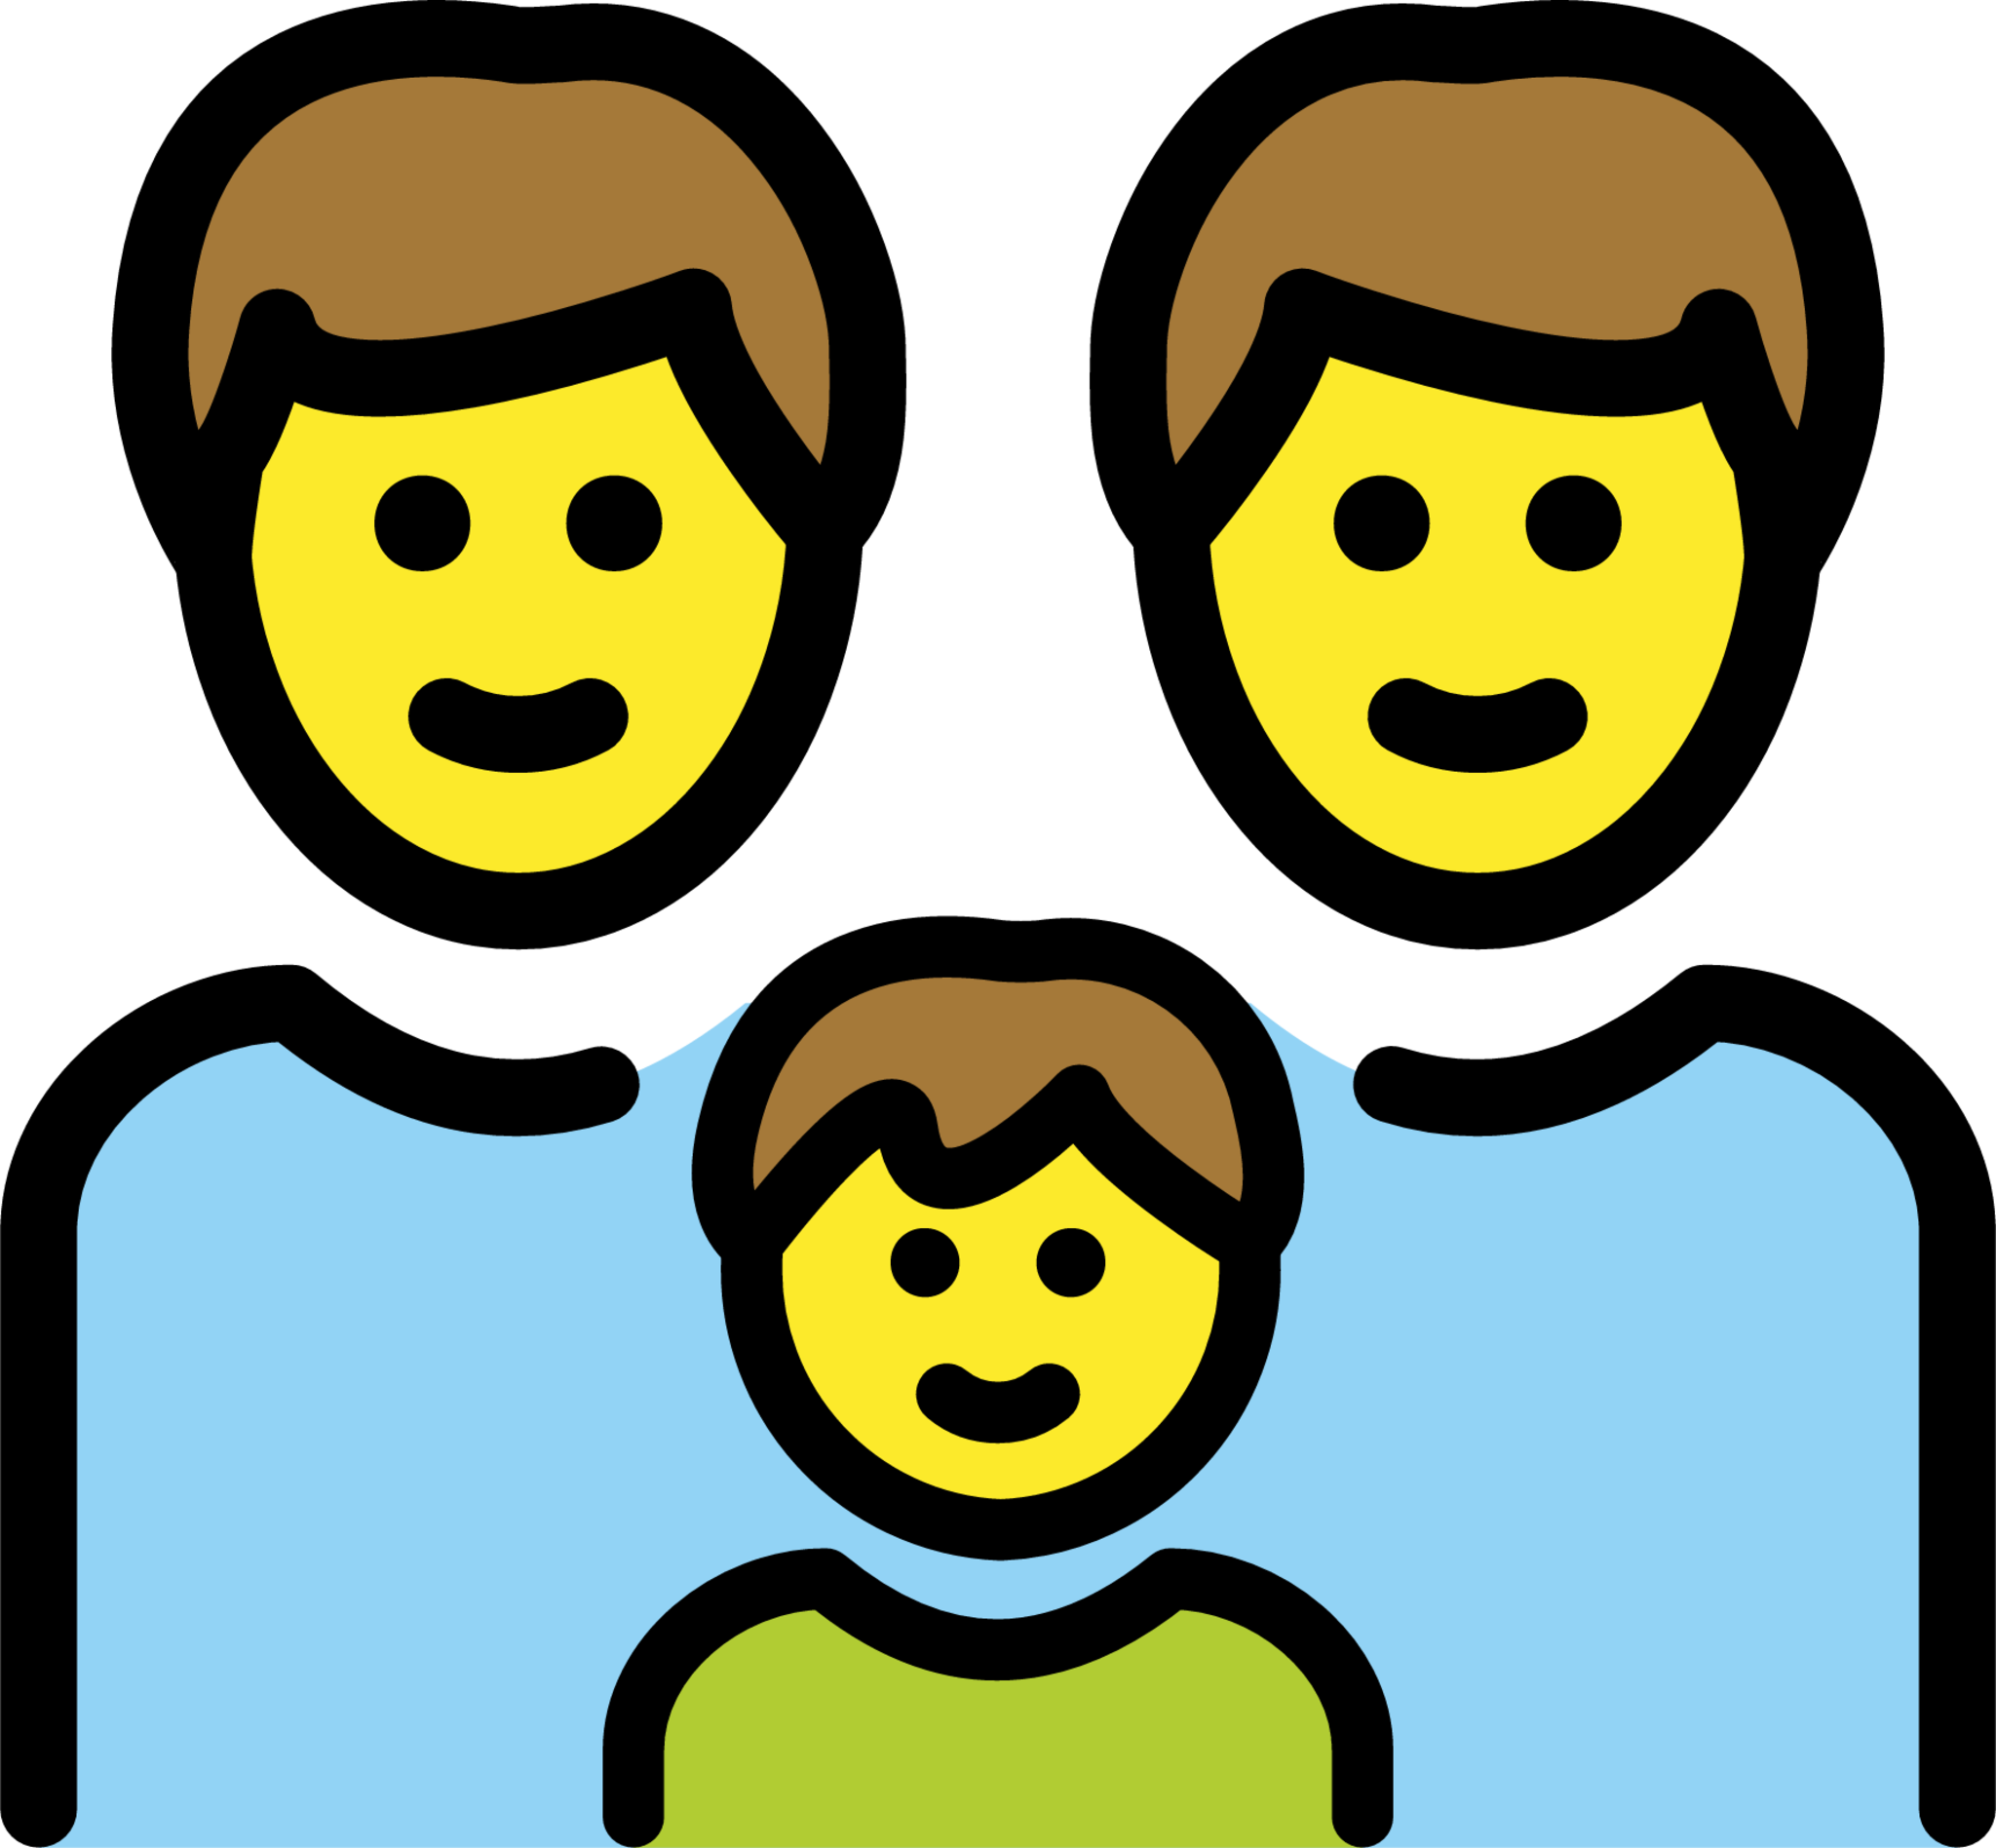 family: man, man, boy emoji